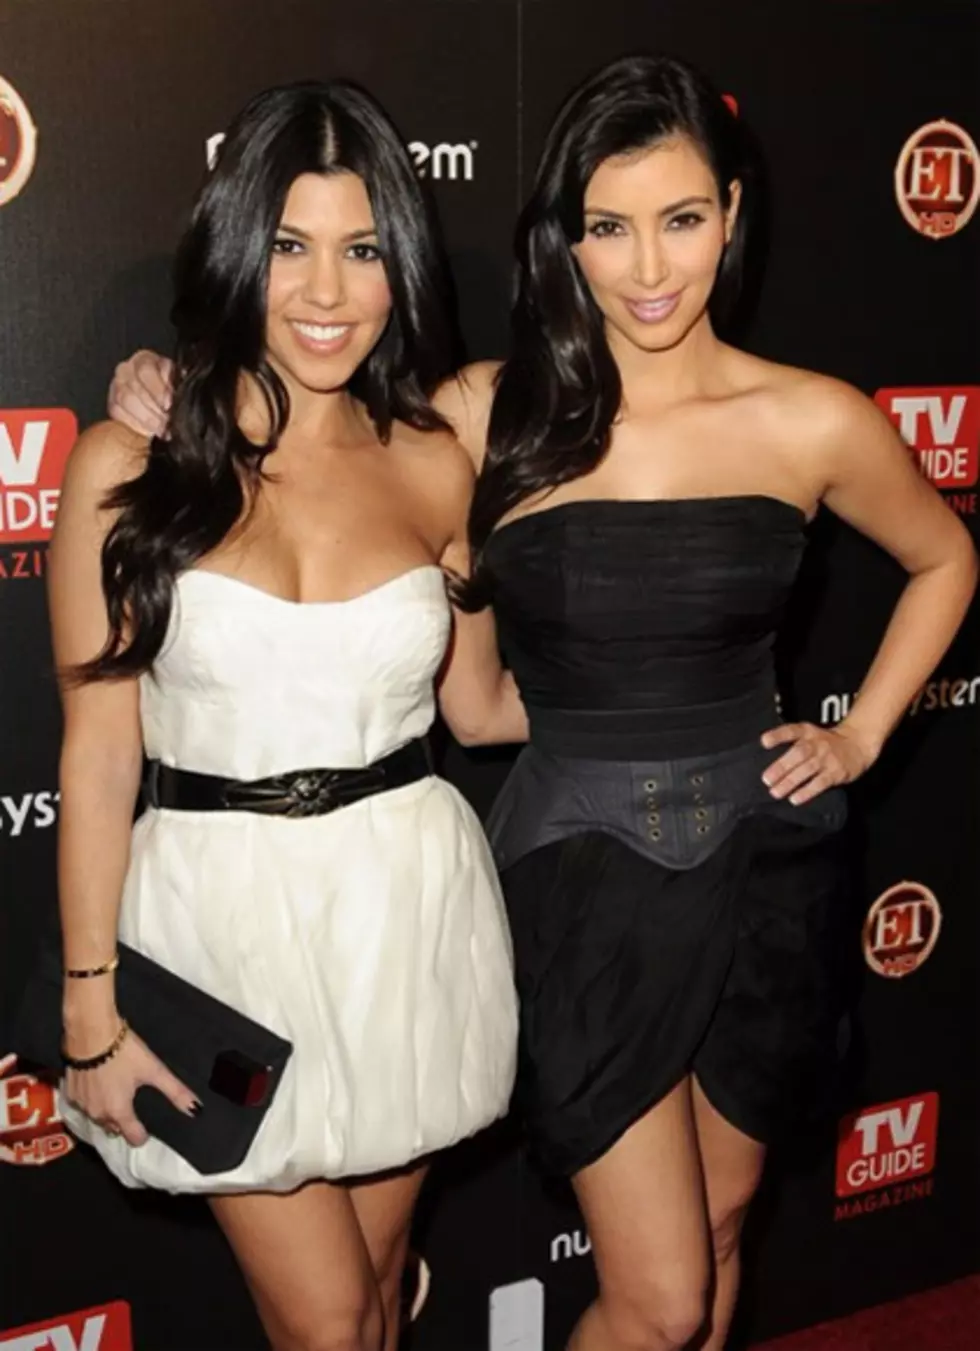 News Anchor Disses Kardashians